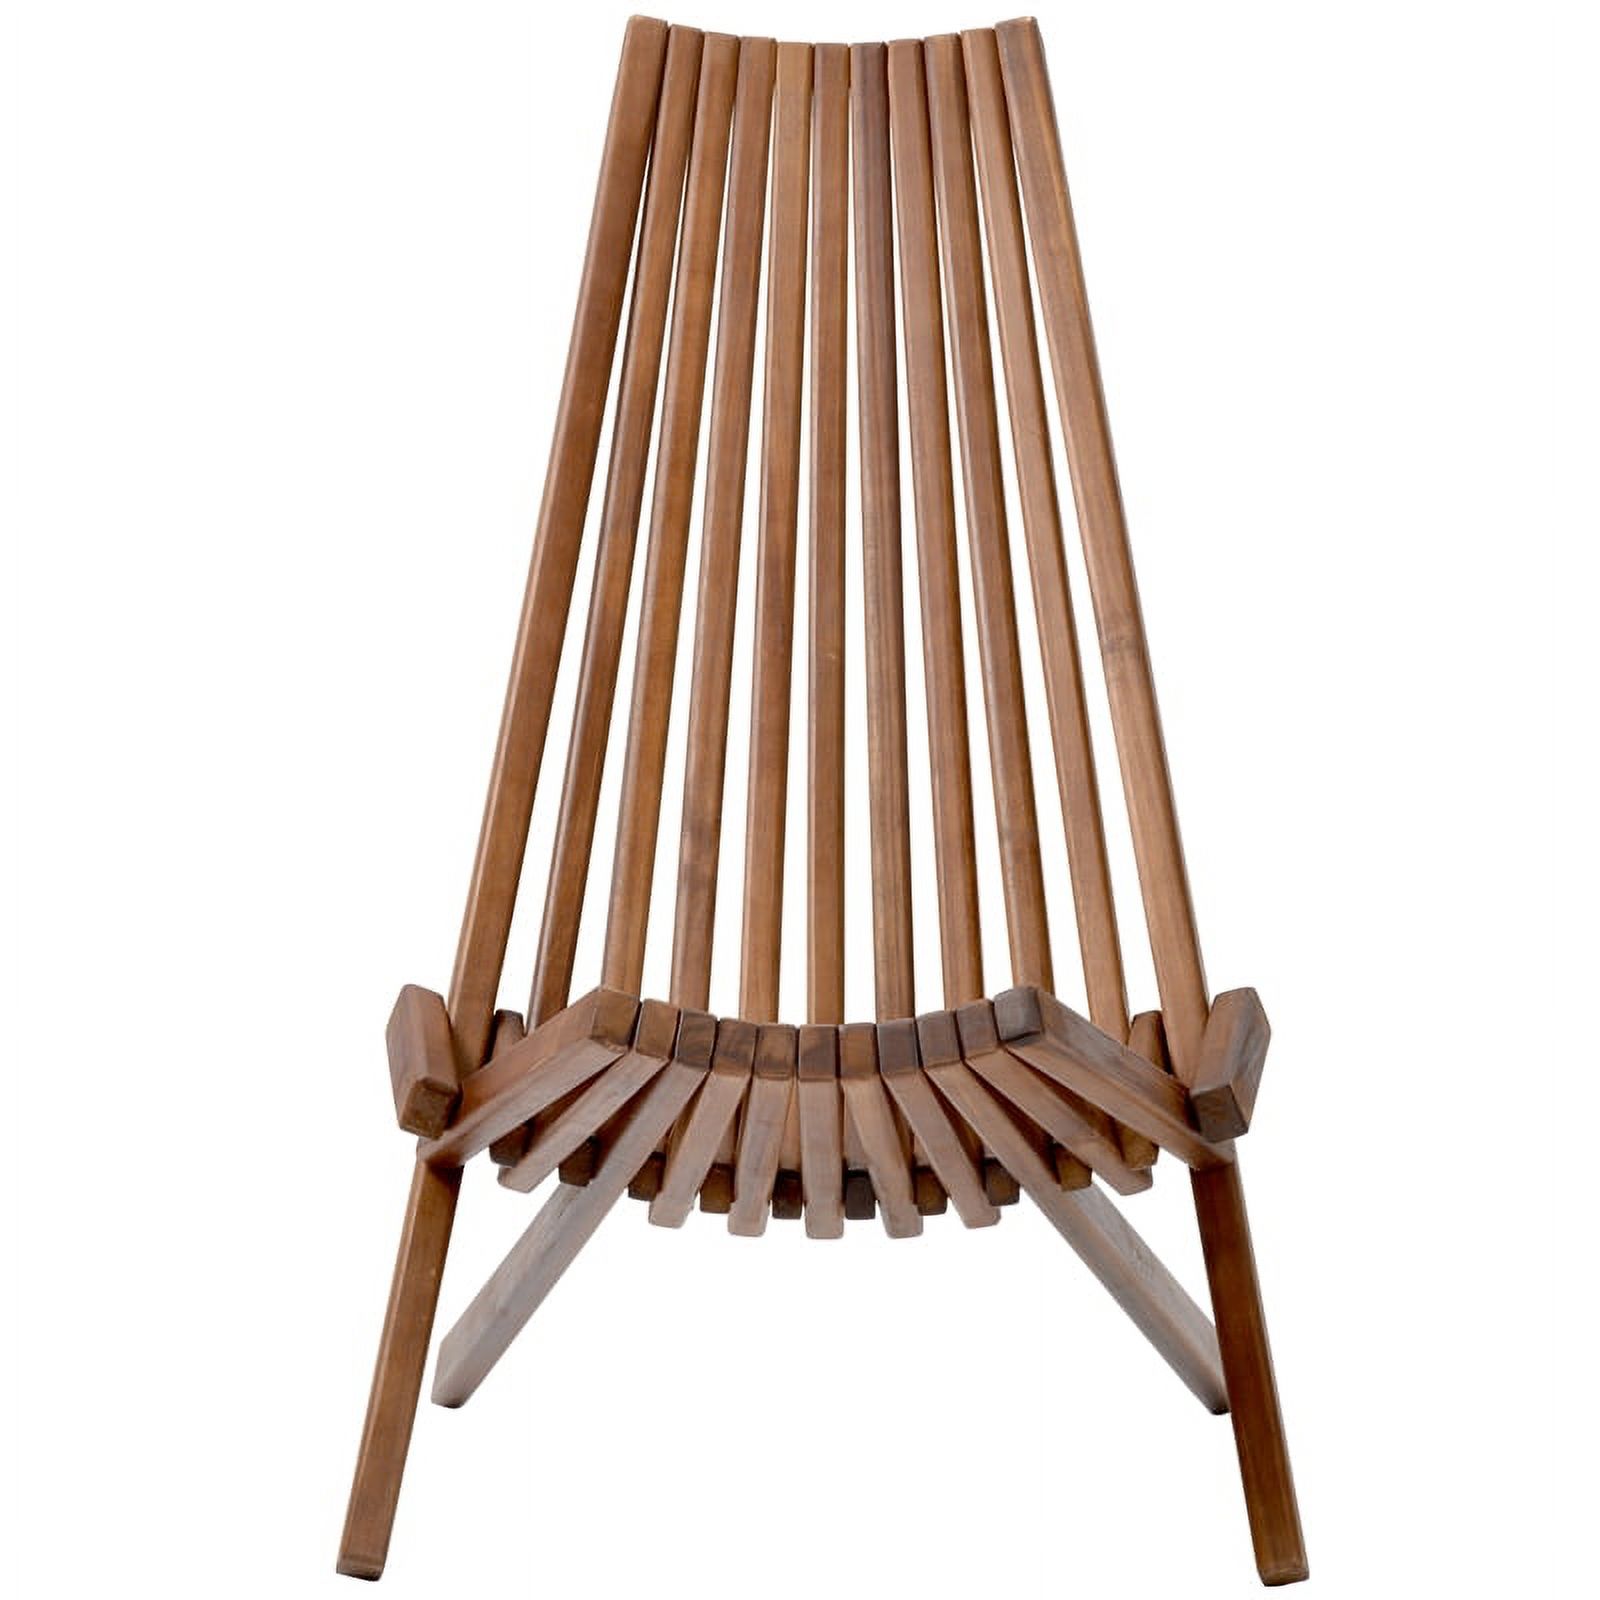 CRO Decor Folding Garden Chairs Acacia Wood Lounge Chair Yard Balcony Furniture - image 5 of 10